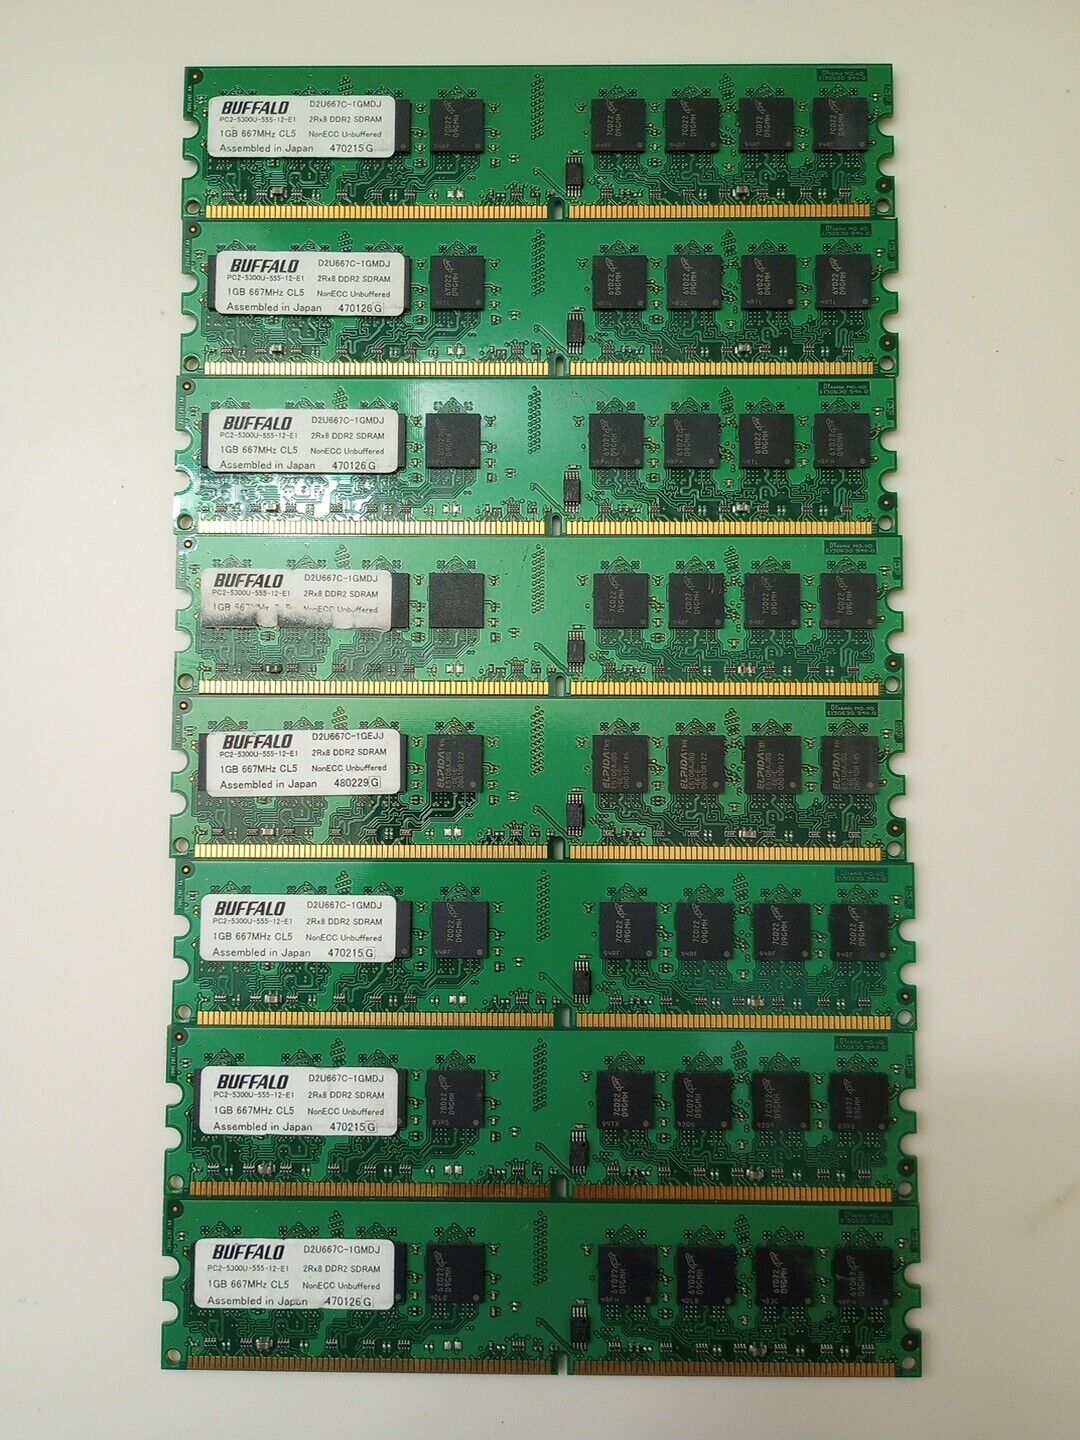 8GB 8x1GB PC2-5300 BUFFALO D2U667C-1GEJJ DDR2-667 DESKTOP RAM MEMORY KIT DIMM